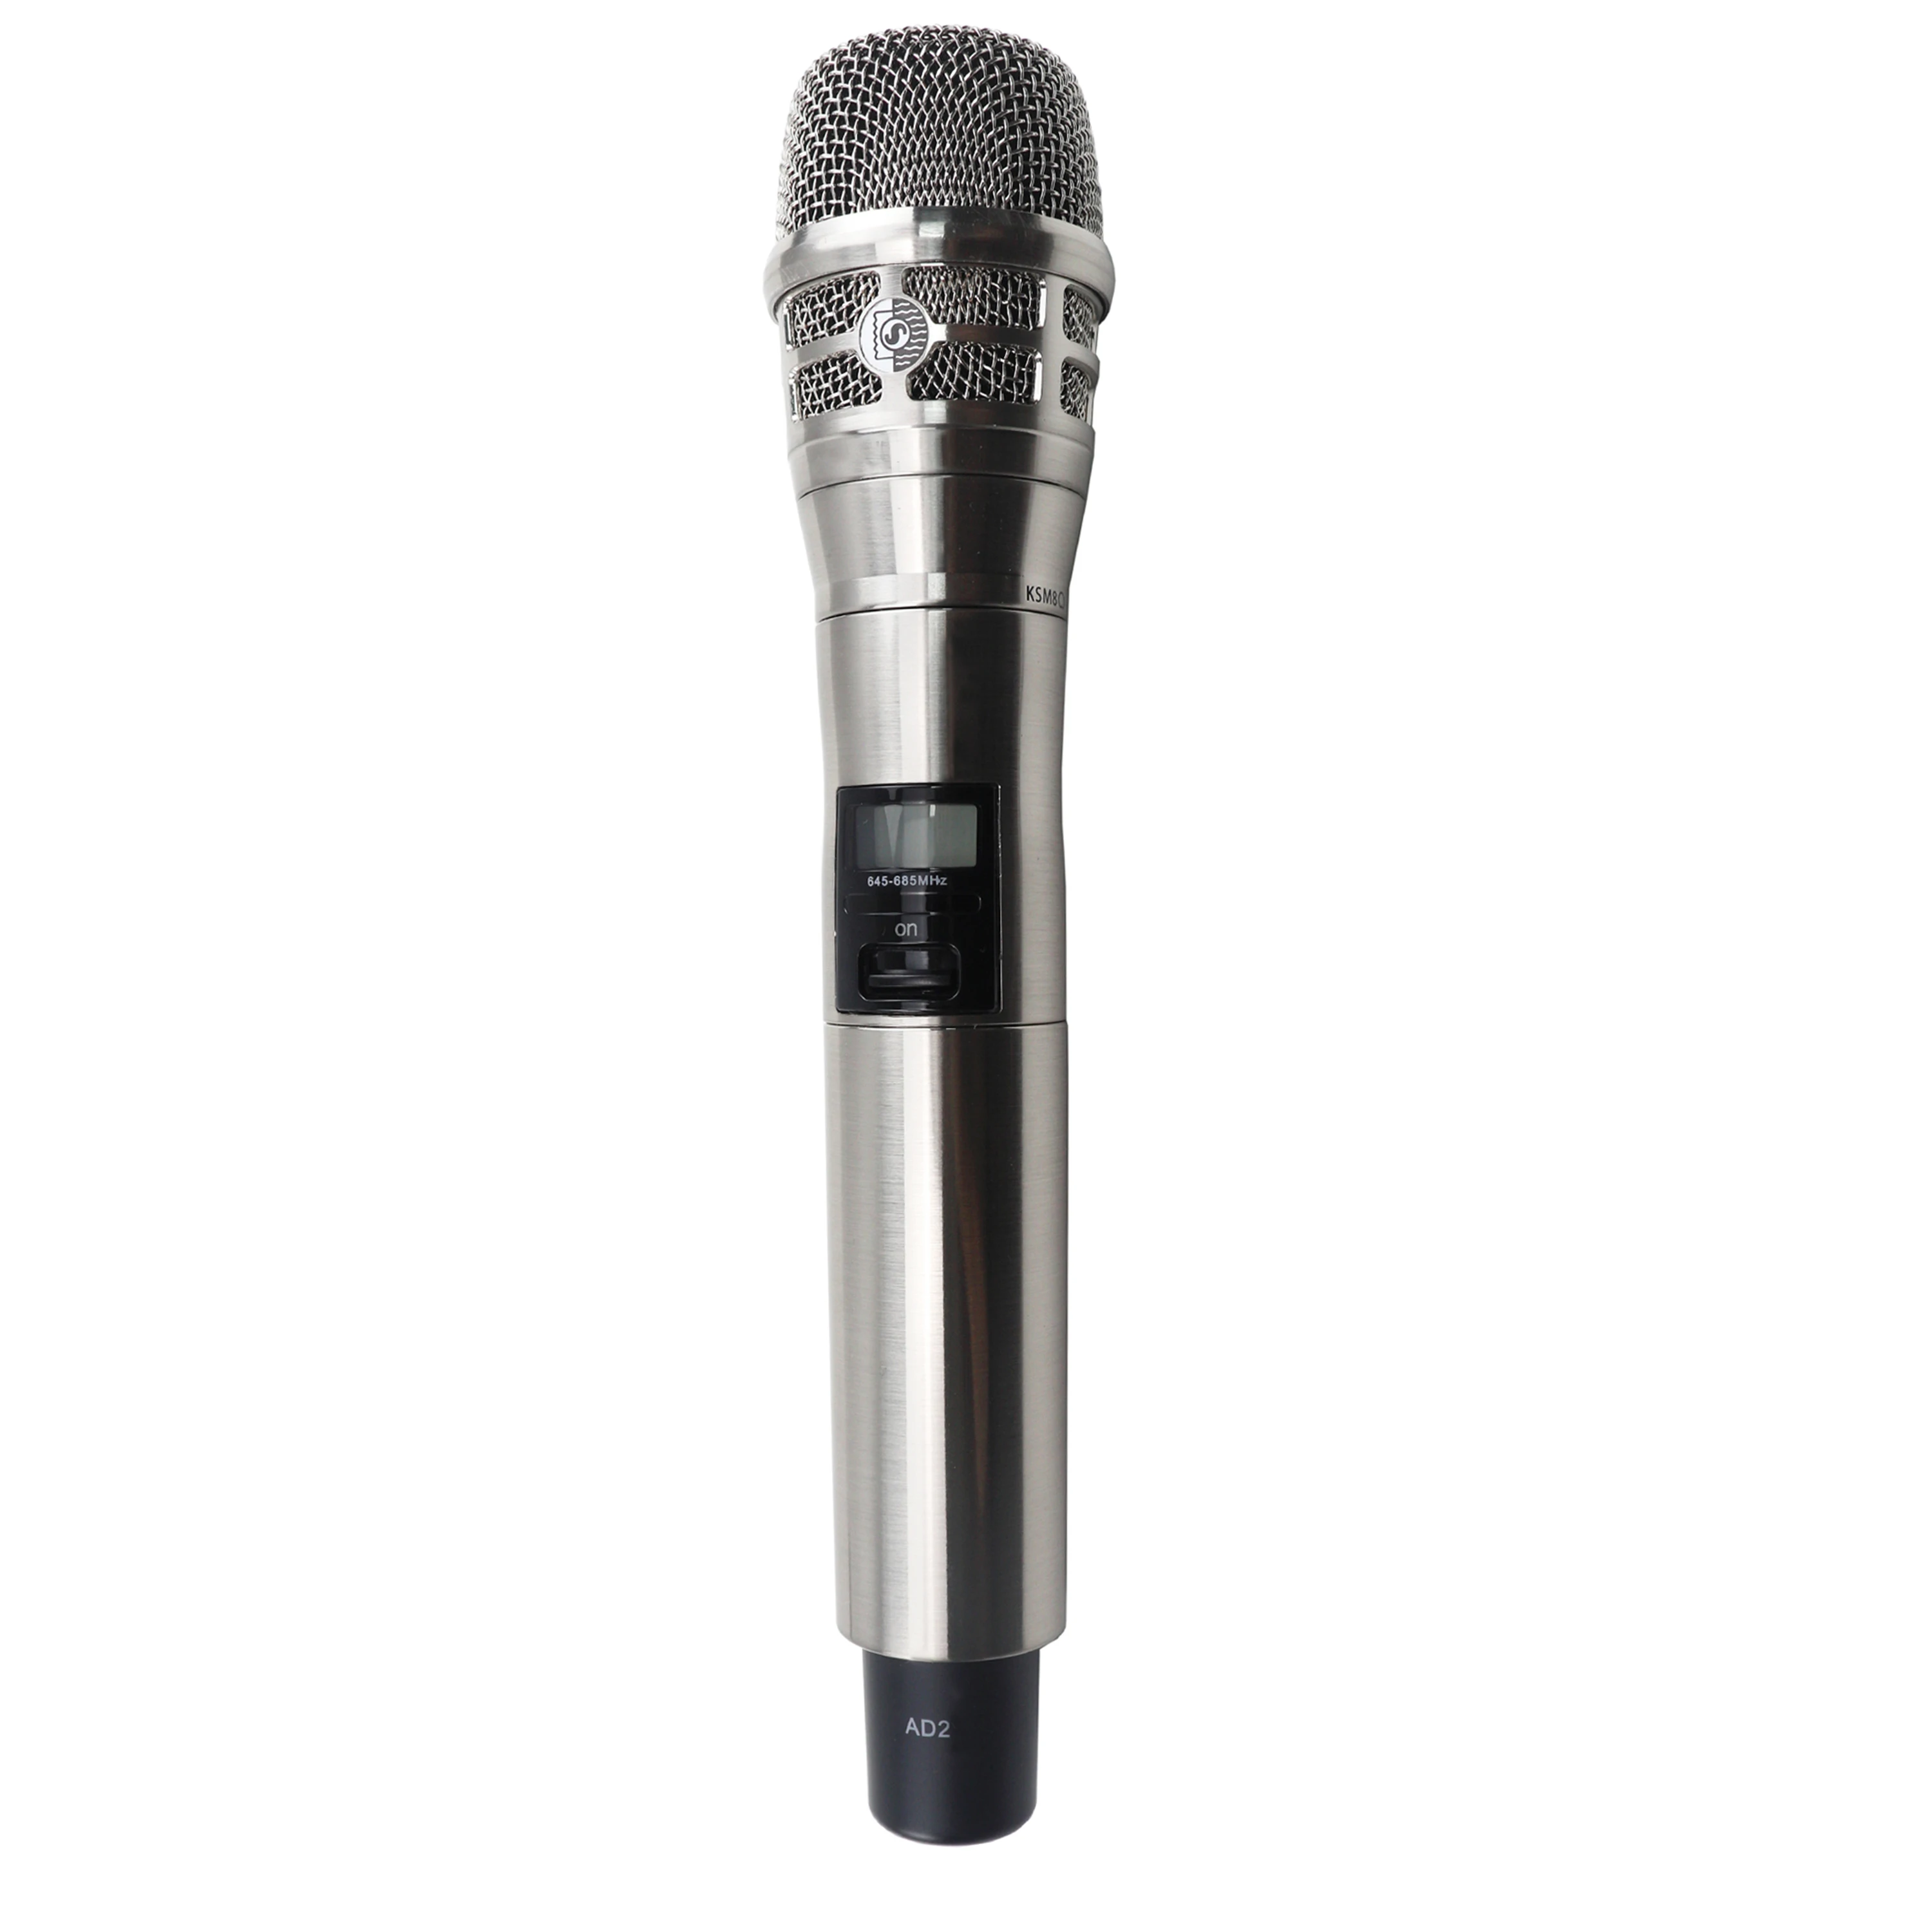 Moderno microfone portátil para ad4d, transmissor de microfone 645-695mhz